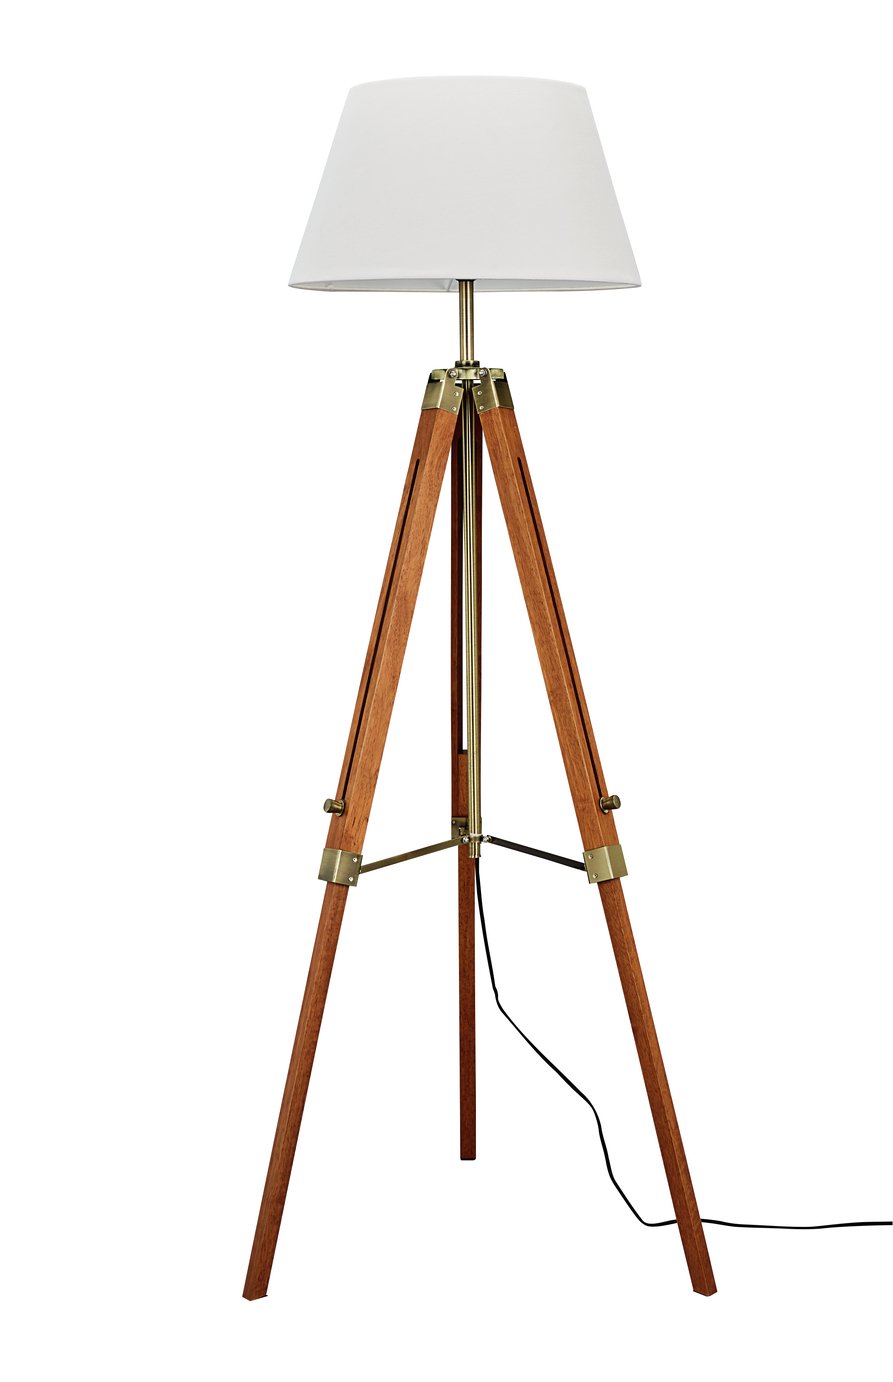 Argos Home Colonial Tripod Floor Lamp - Antique Brass & Wood